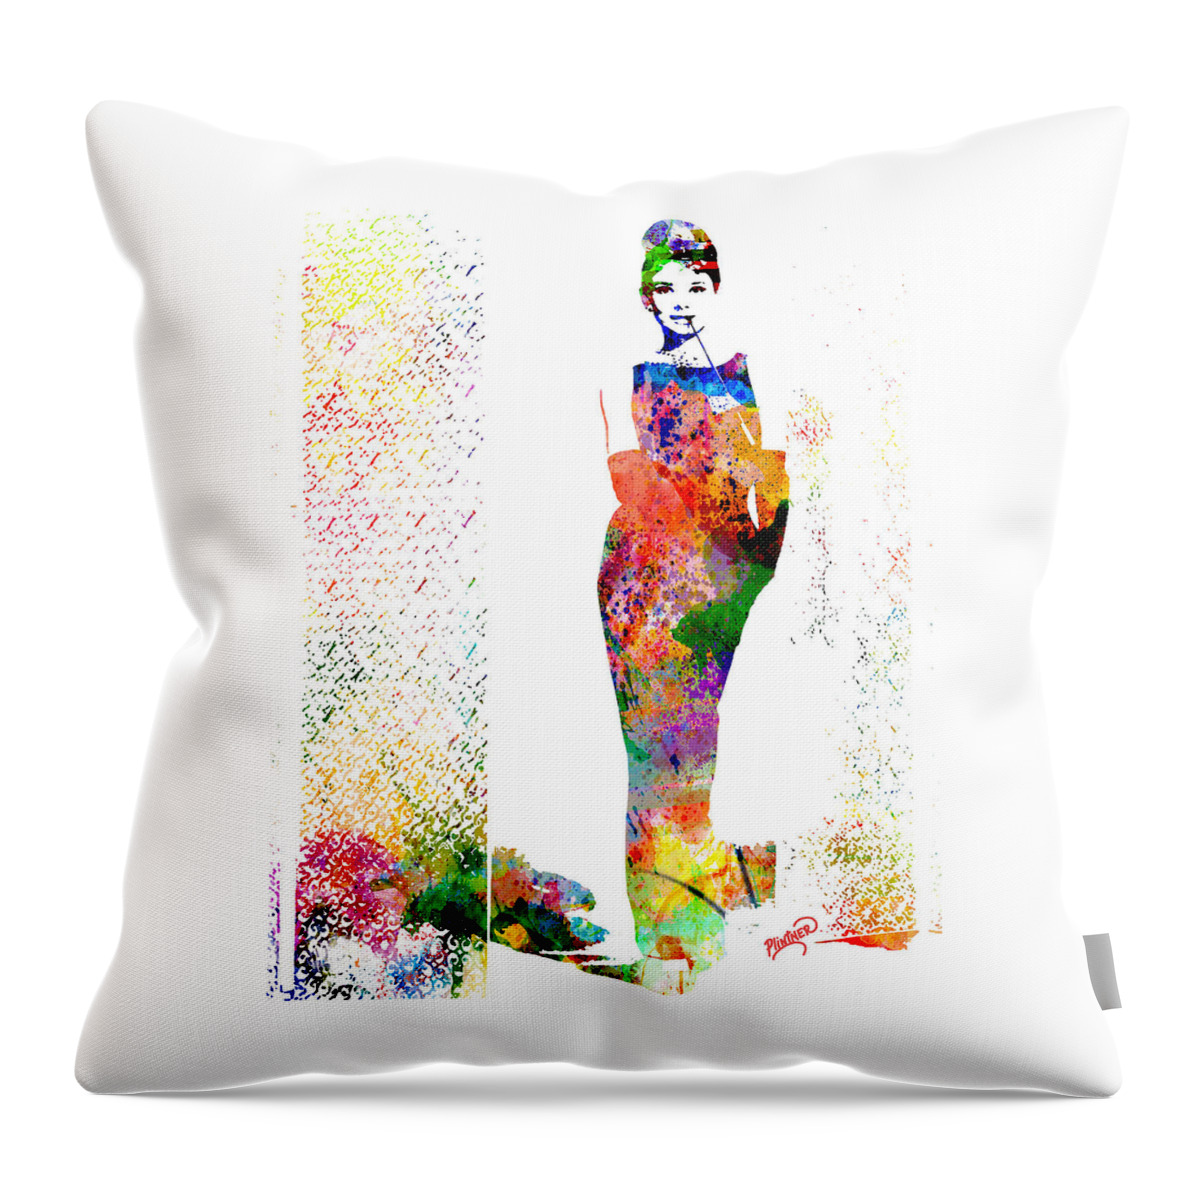 Audrey Hepburn Throw Pillow featuring the digital art Audrey Hepburn by Patricia Lintner